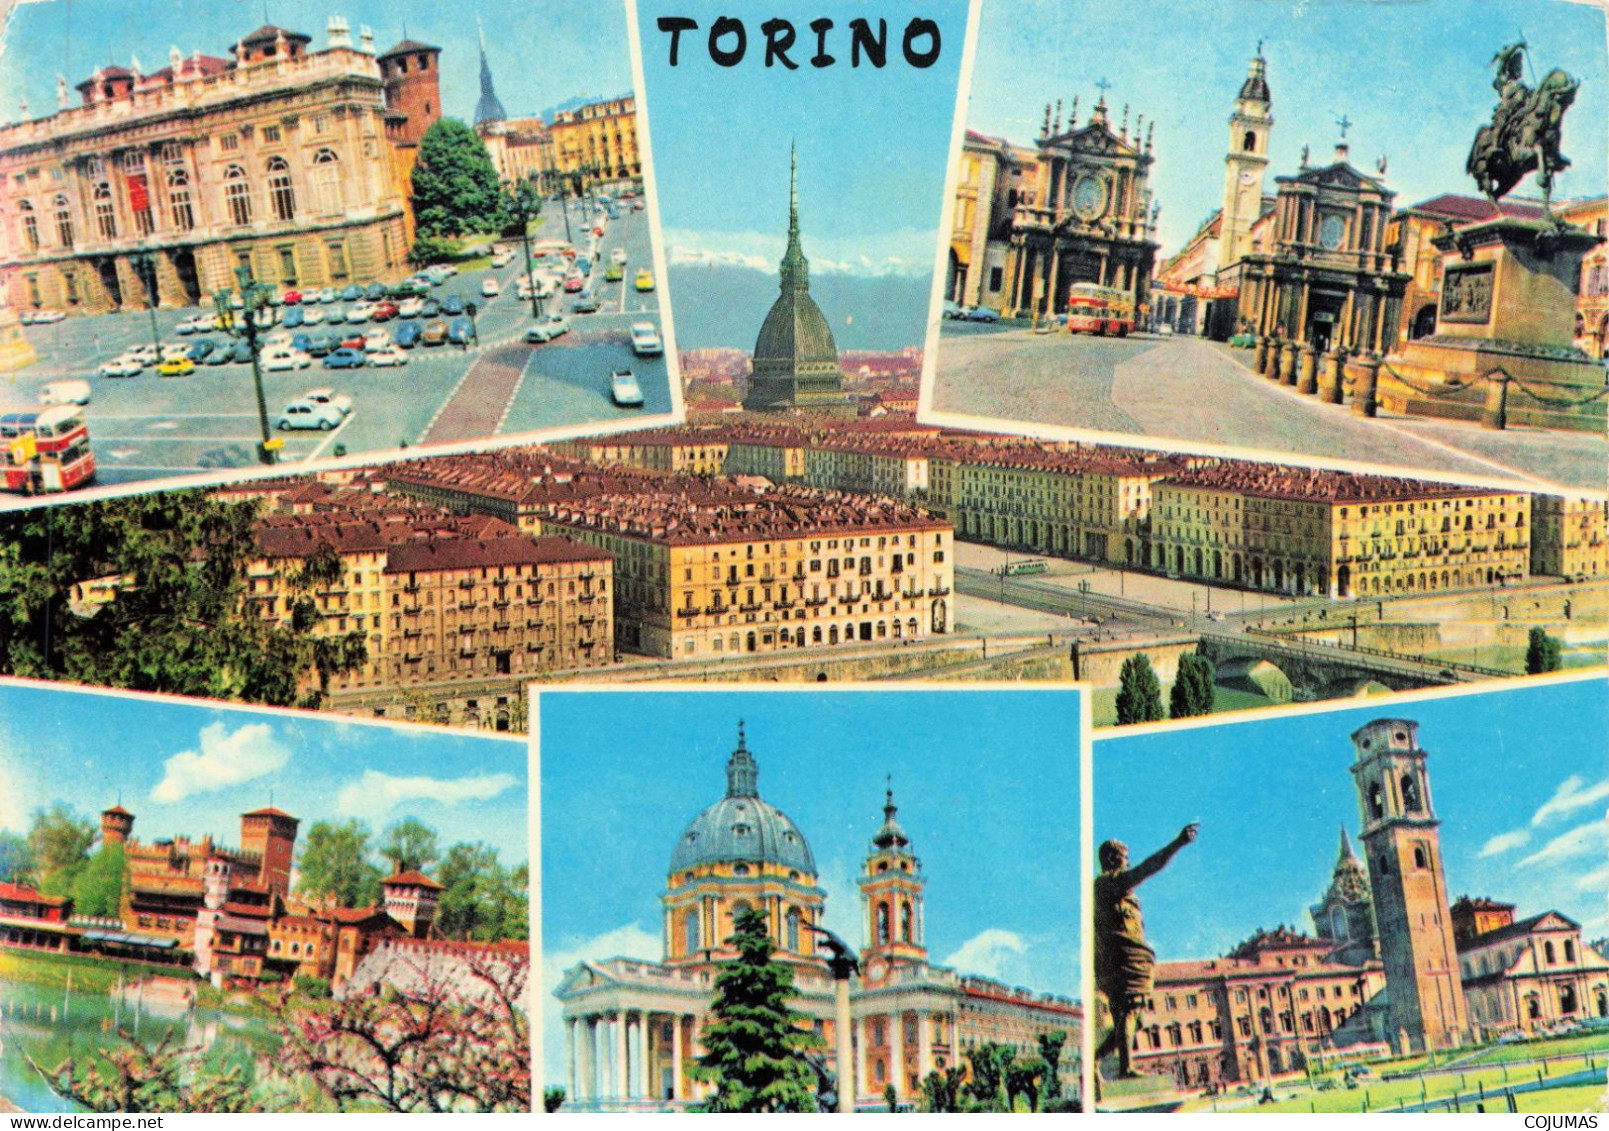 ITALIE - S18254 - Torino - Palazzo Madama Piazza S. Carlo Panorama Castello Medioevale Basilica - CPSM15x10cm - Andere Monumente & Gebäude